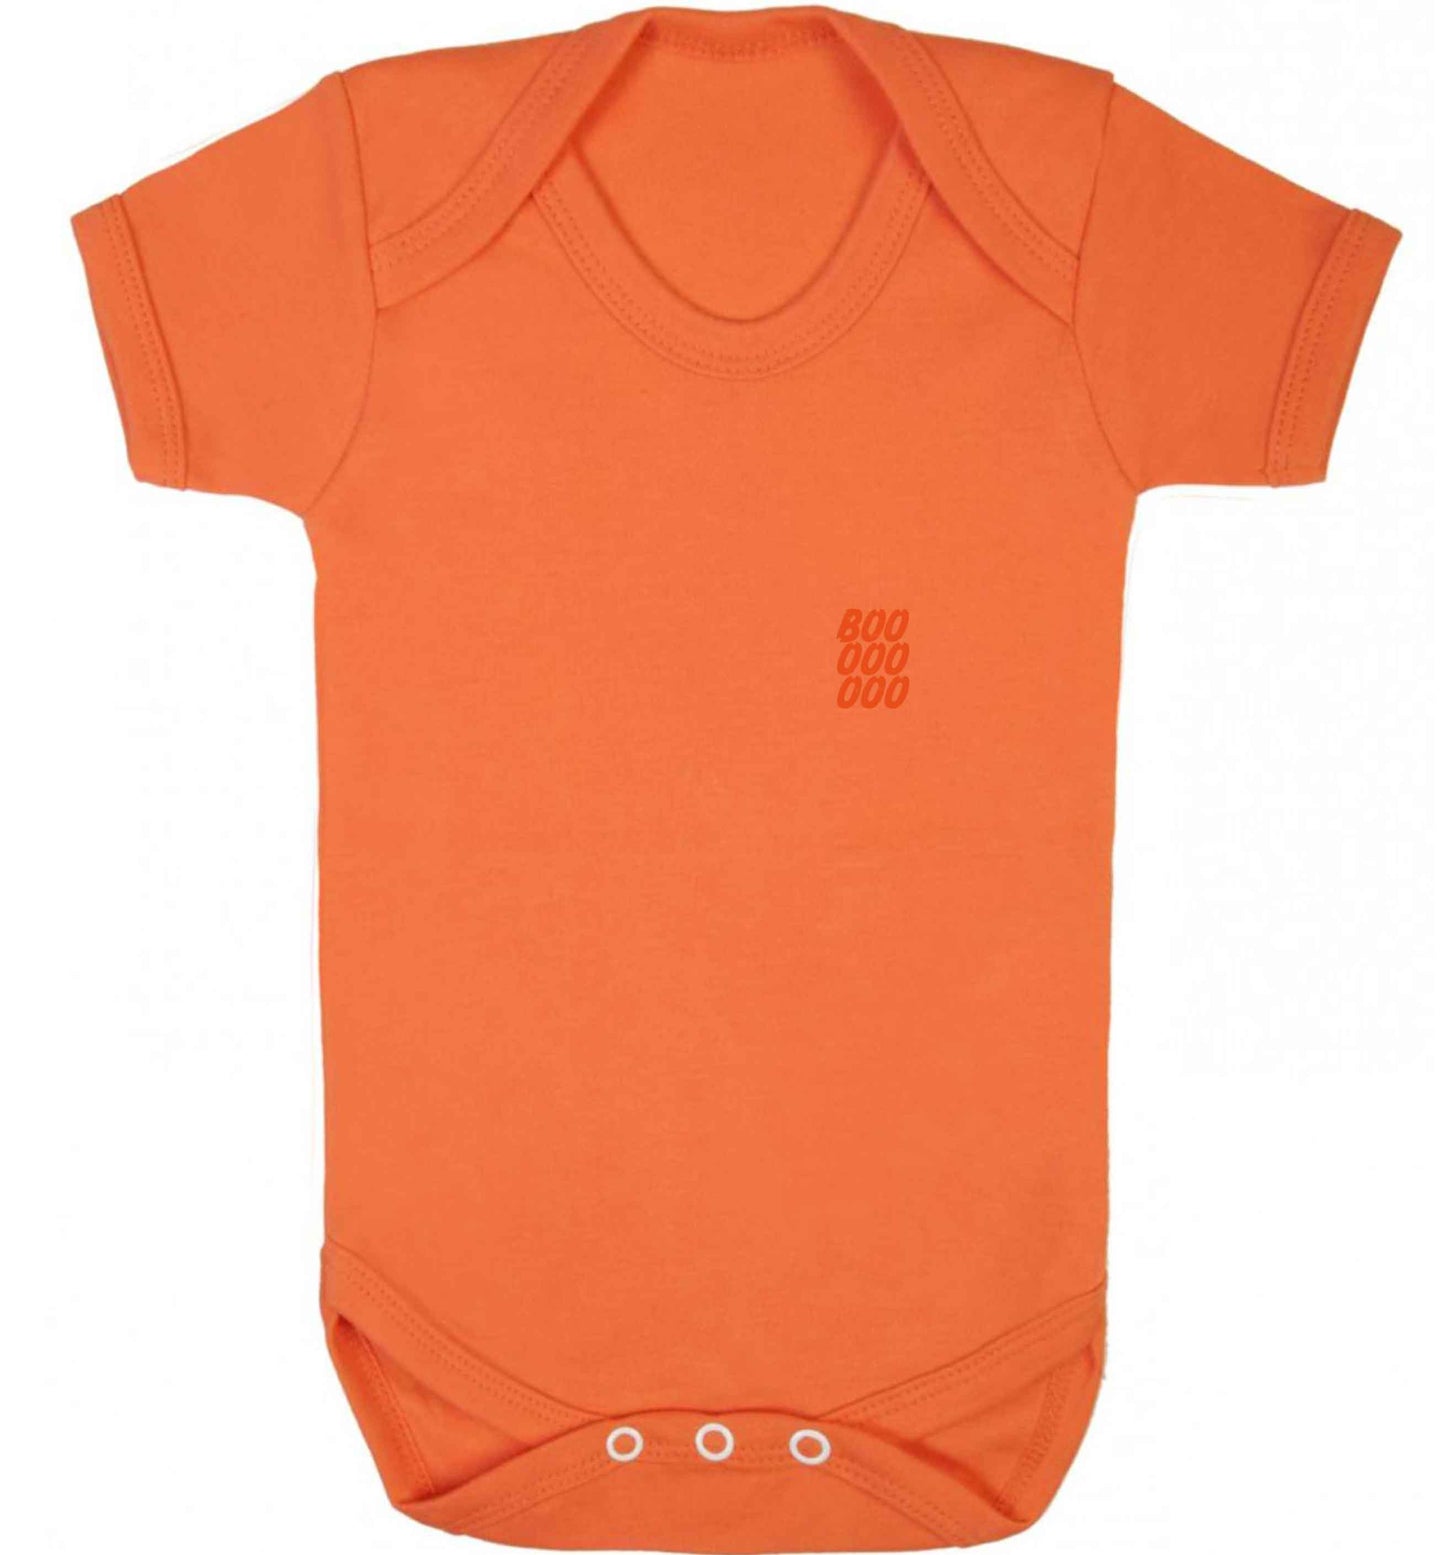 Boo pocket baby vest orange 18-24 months